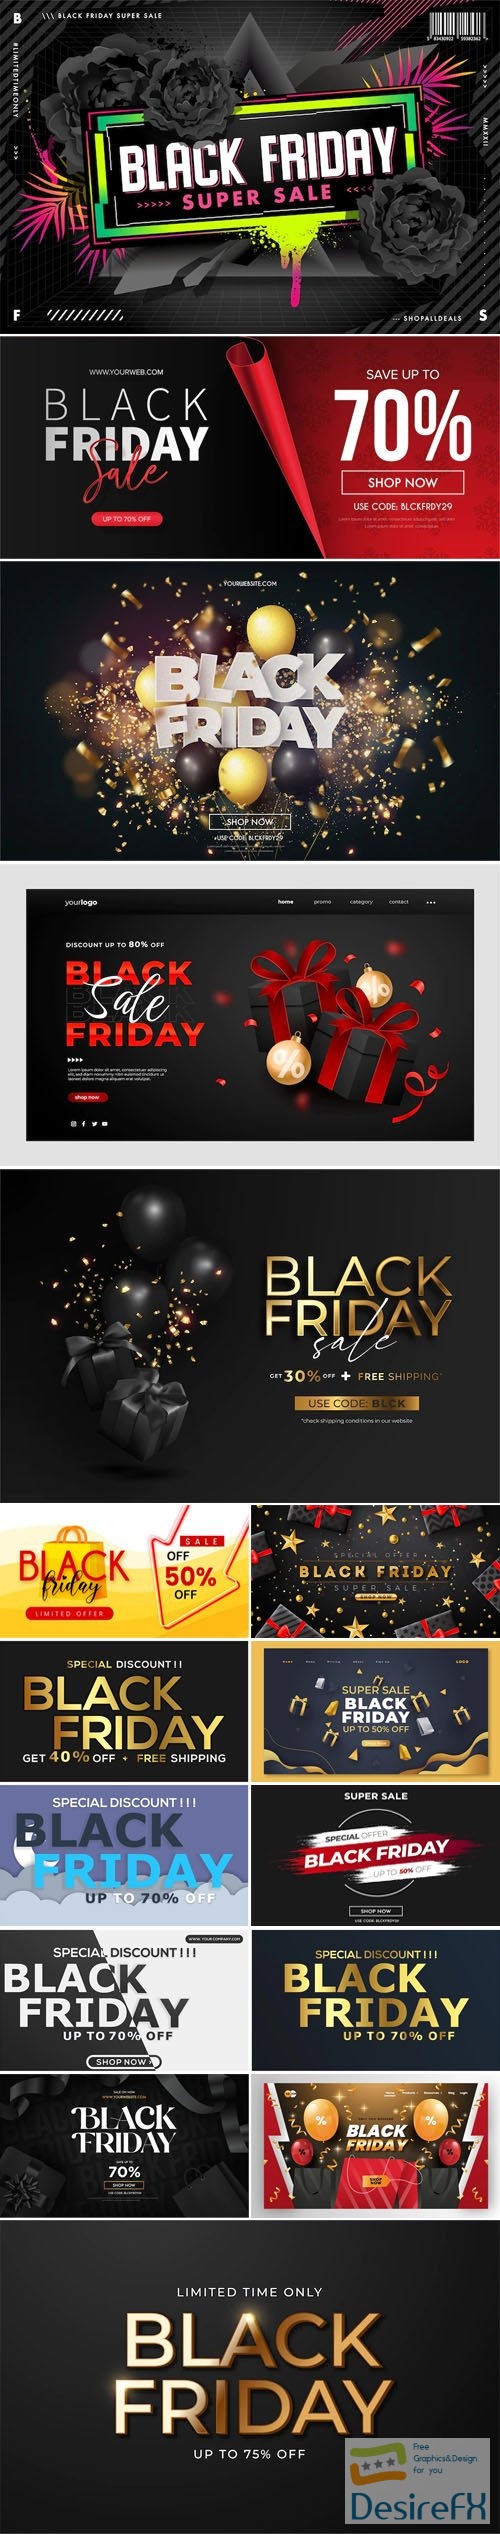 Black Friday Sales - 10+ Modern Web Banners Vector Templates Vol.1